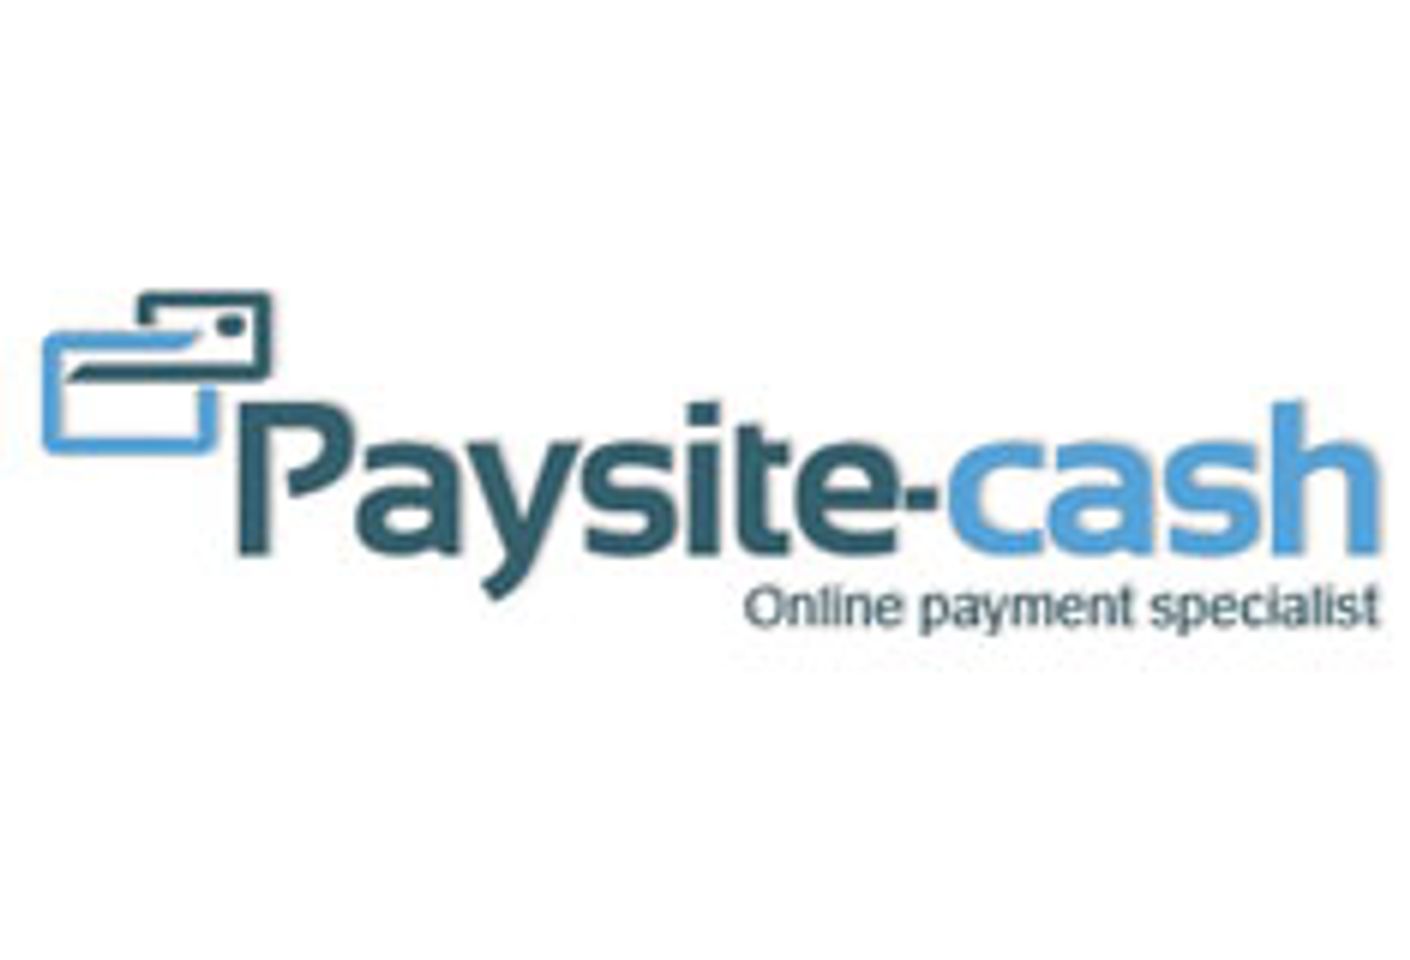 Paysite-Cash Announces Participation in Barcelona Summit 2013